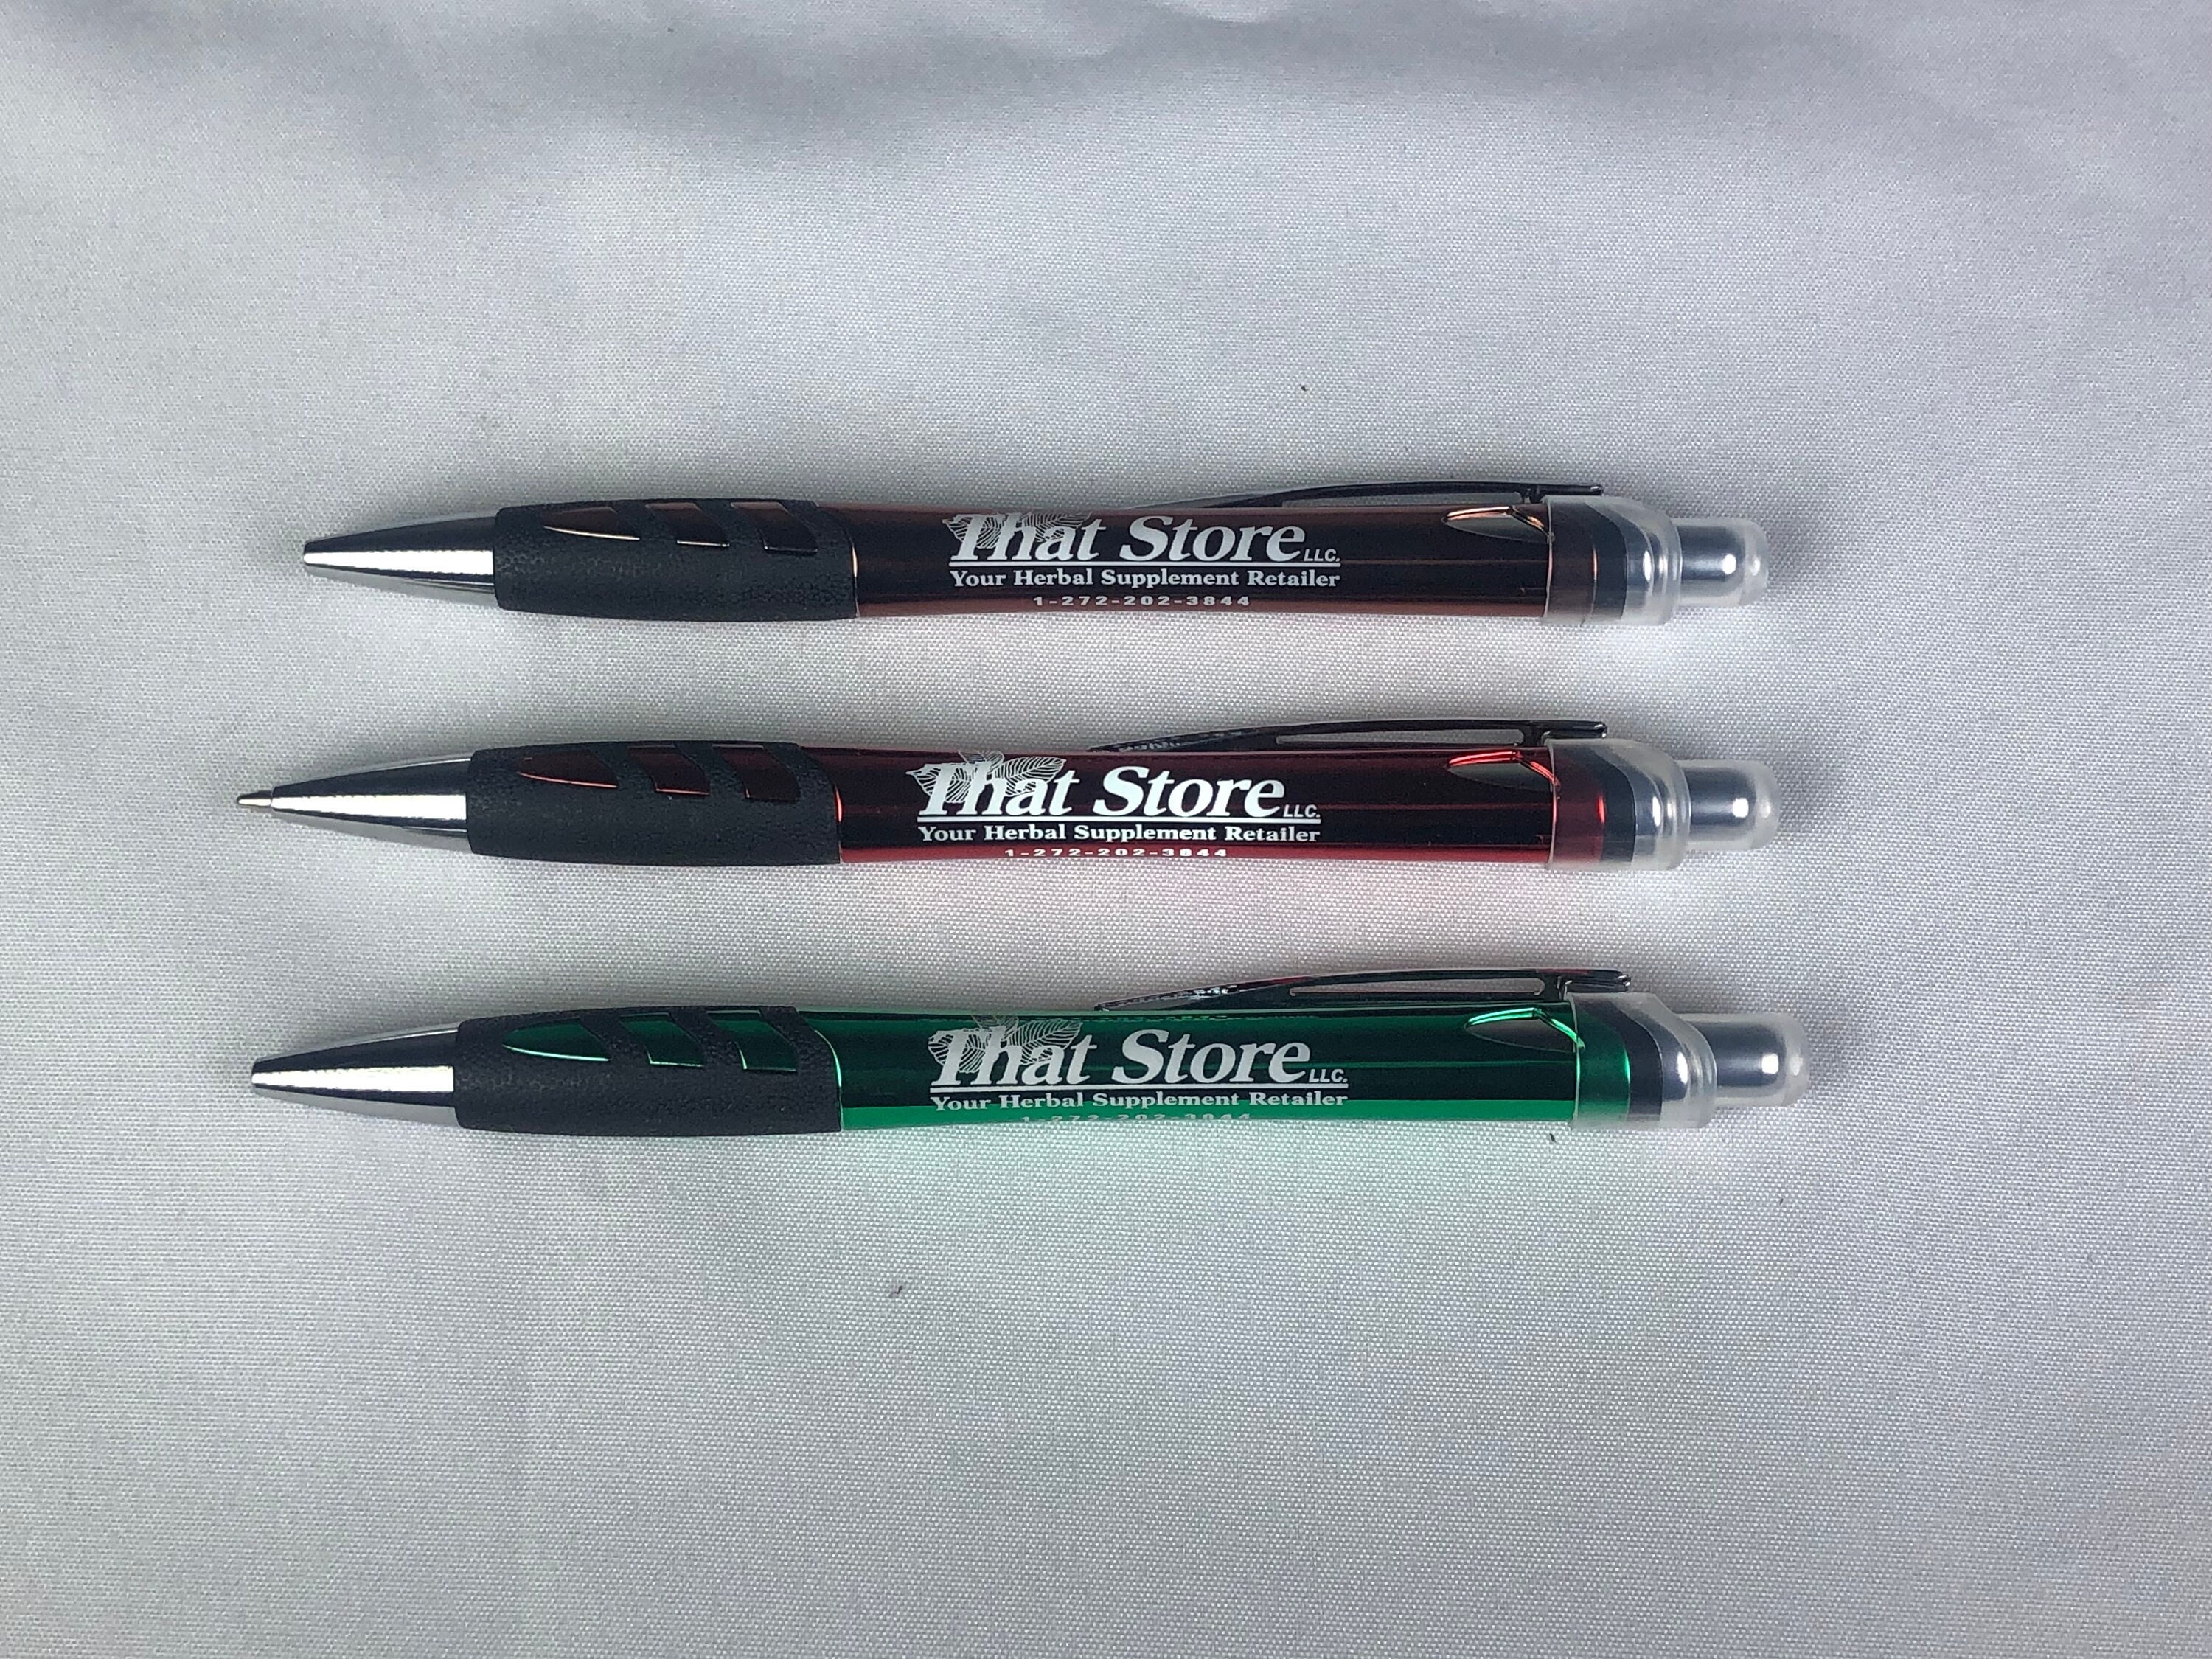 Magic UV Light Pen Invisible Ink Pen School Supplies Party Favor